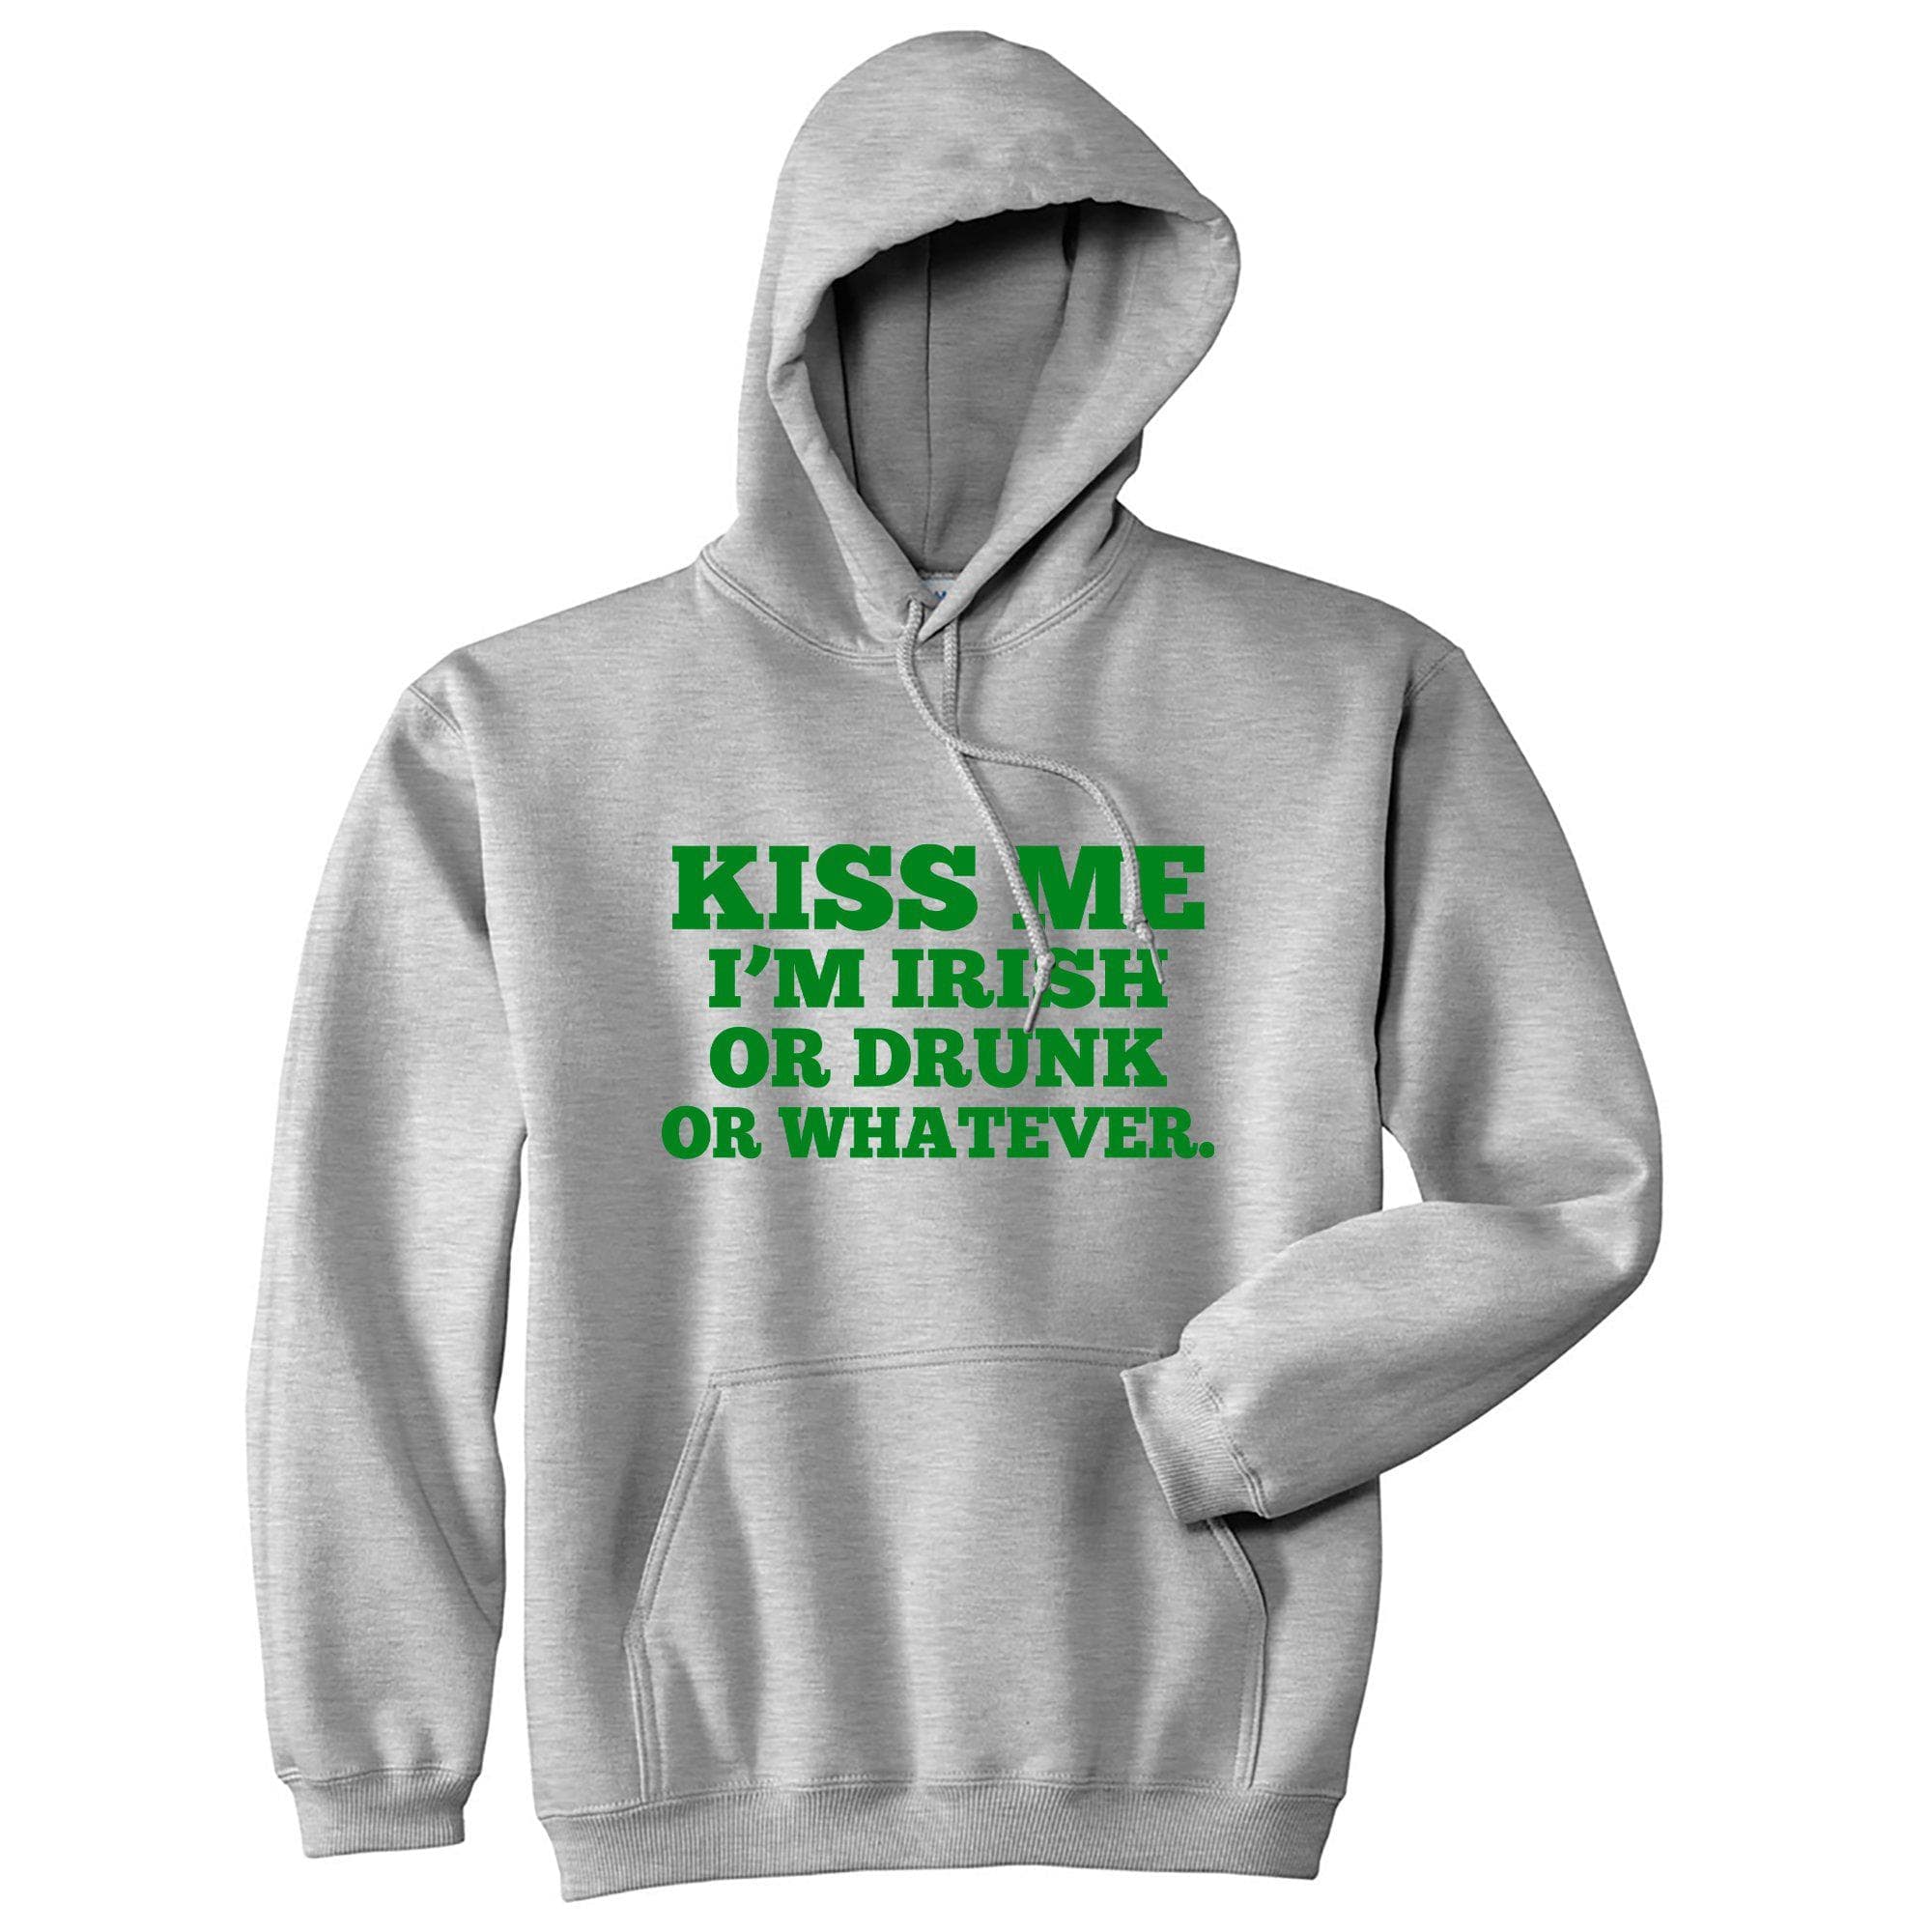 Kiss Me I'm Irish Or Drunk And Whatever Hoodie - Crazy Dog T-Shirts